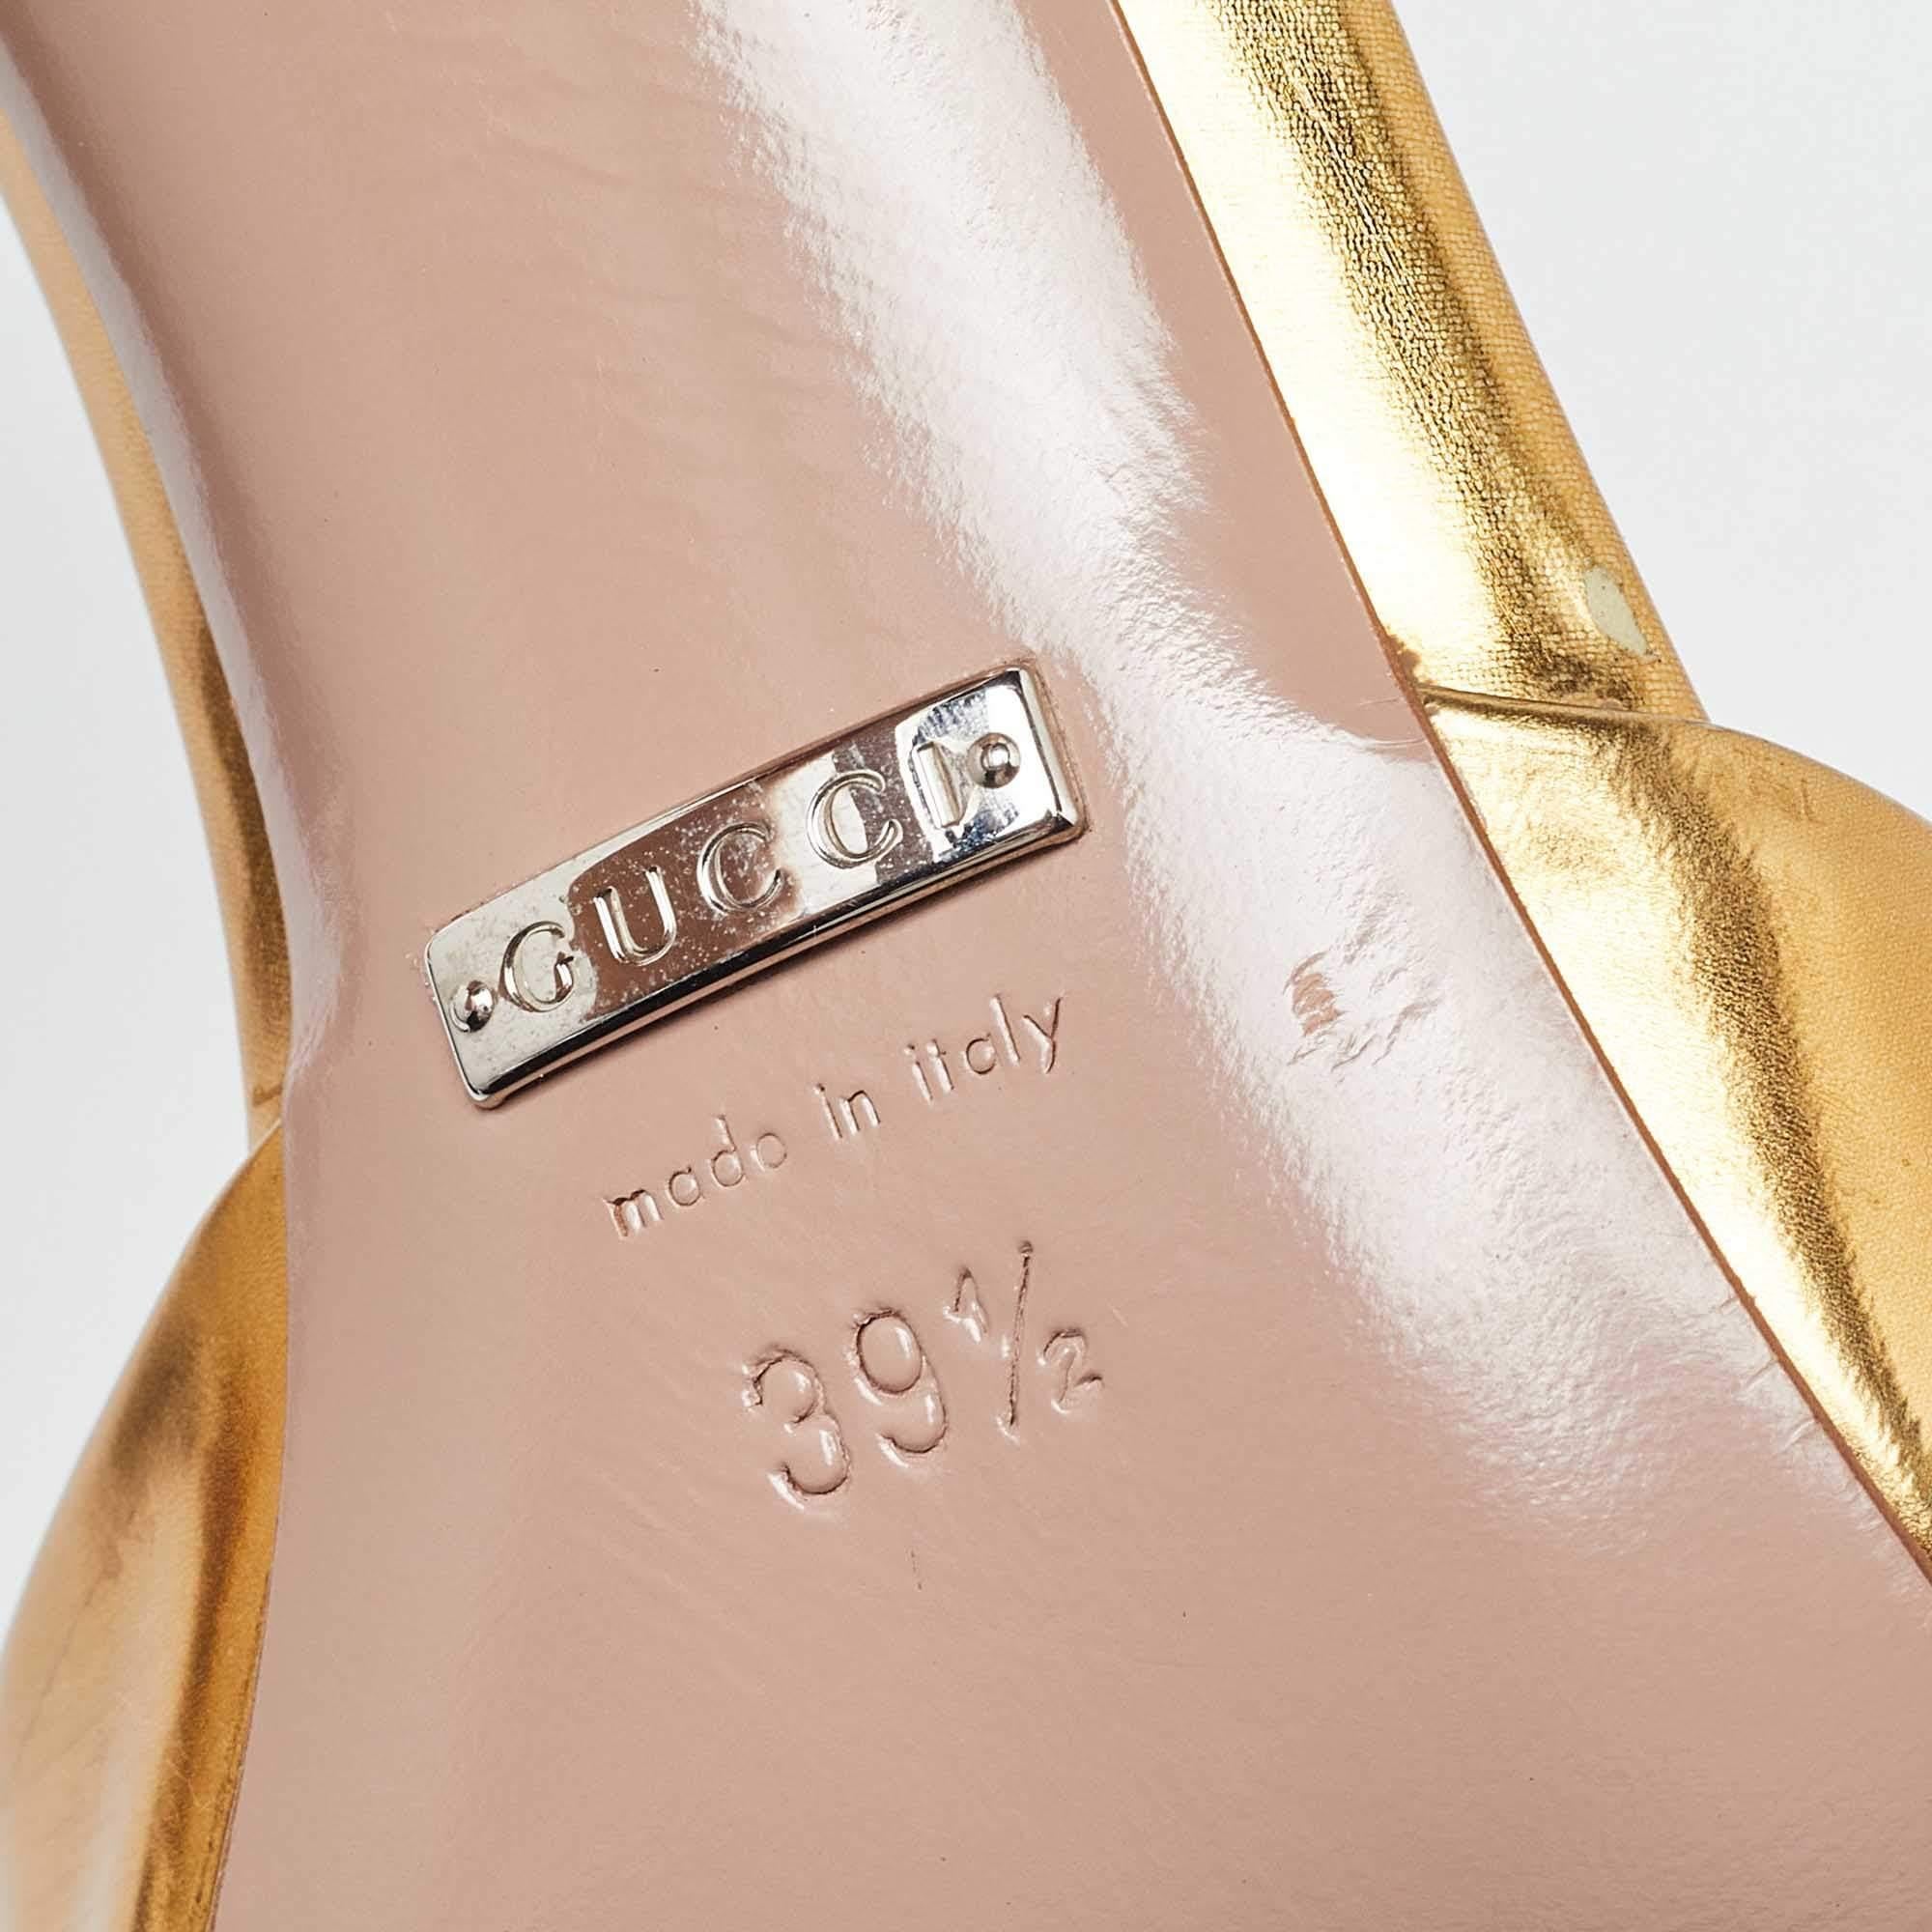 Gucci Gold Patent Leather Coline T Strap Pumps Size 39.5 4